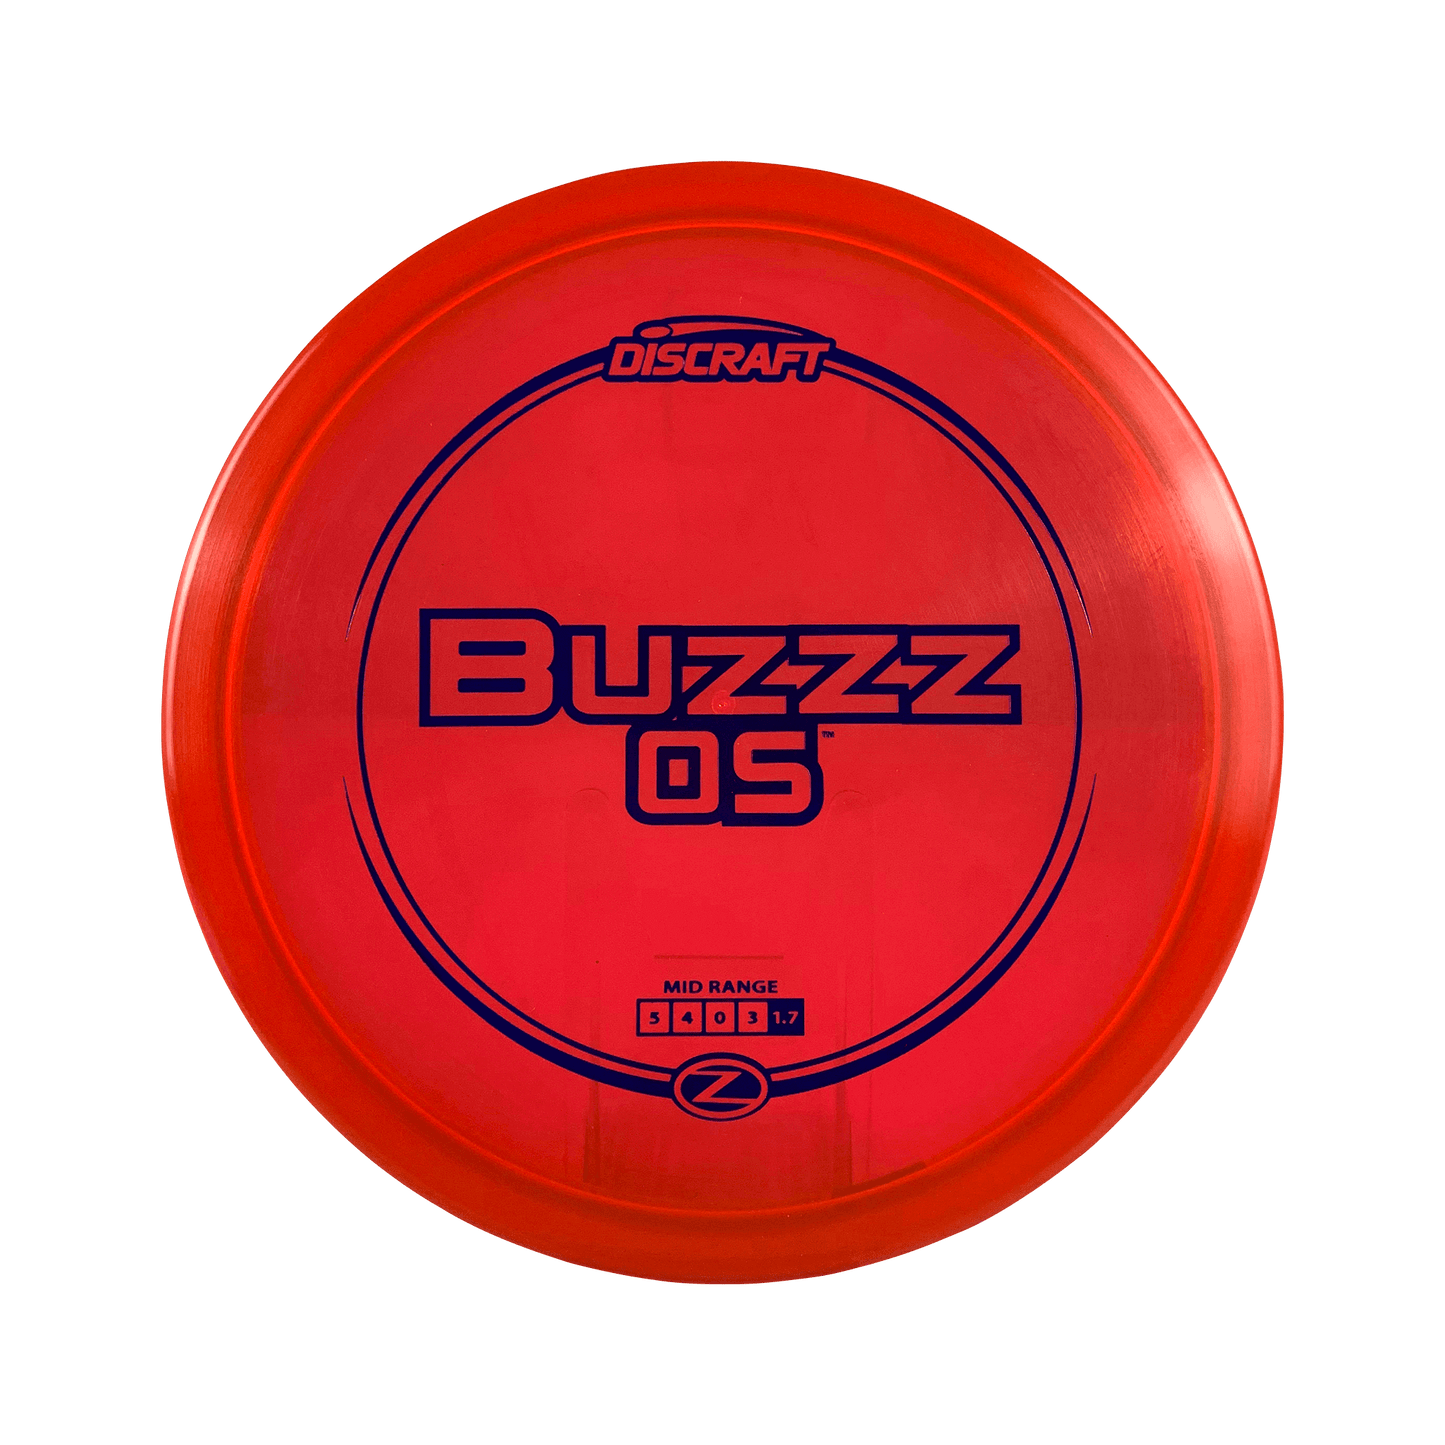 Z Buzzz OS Disc Discraft red 177 